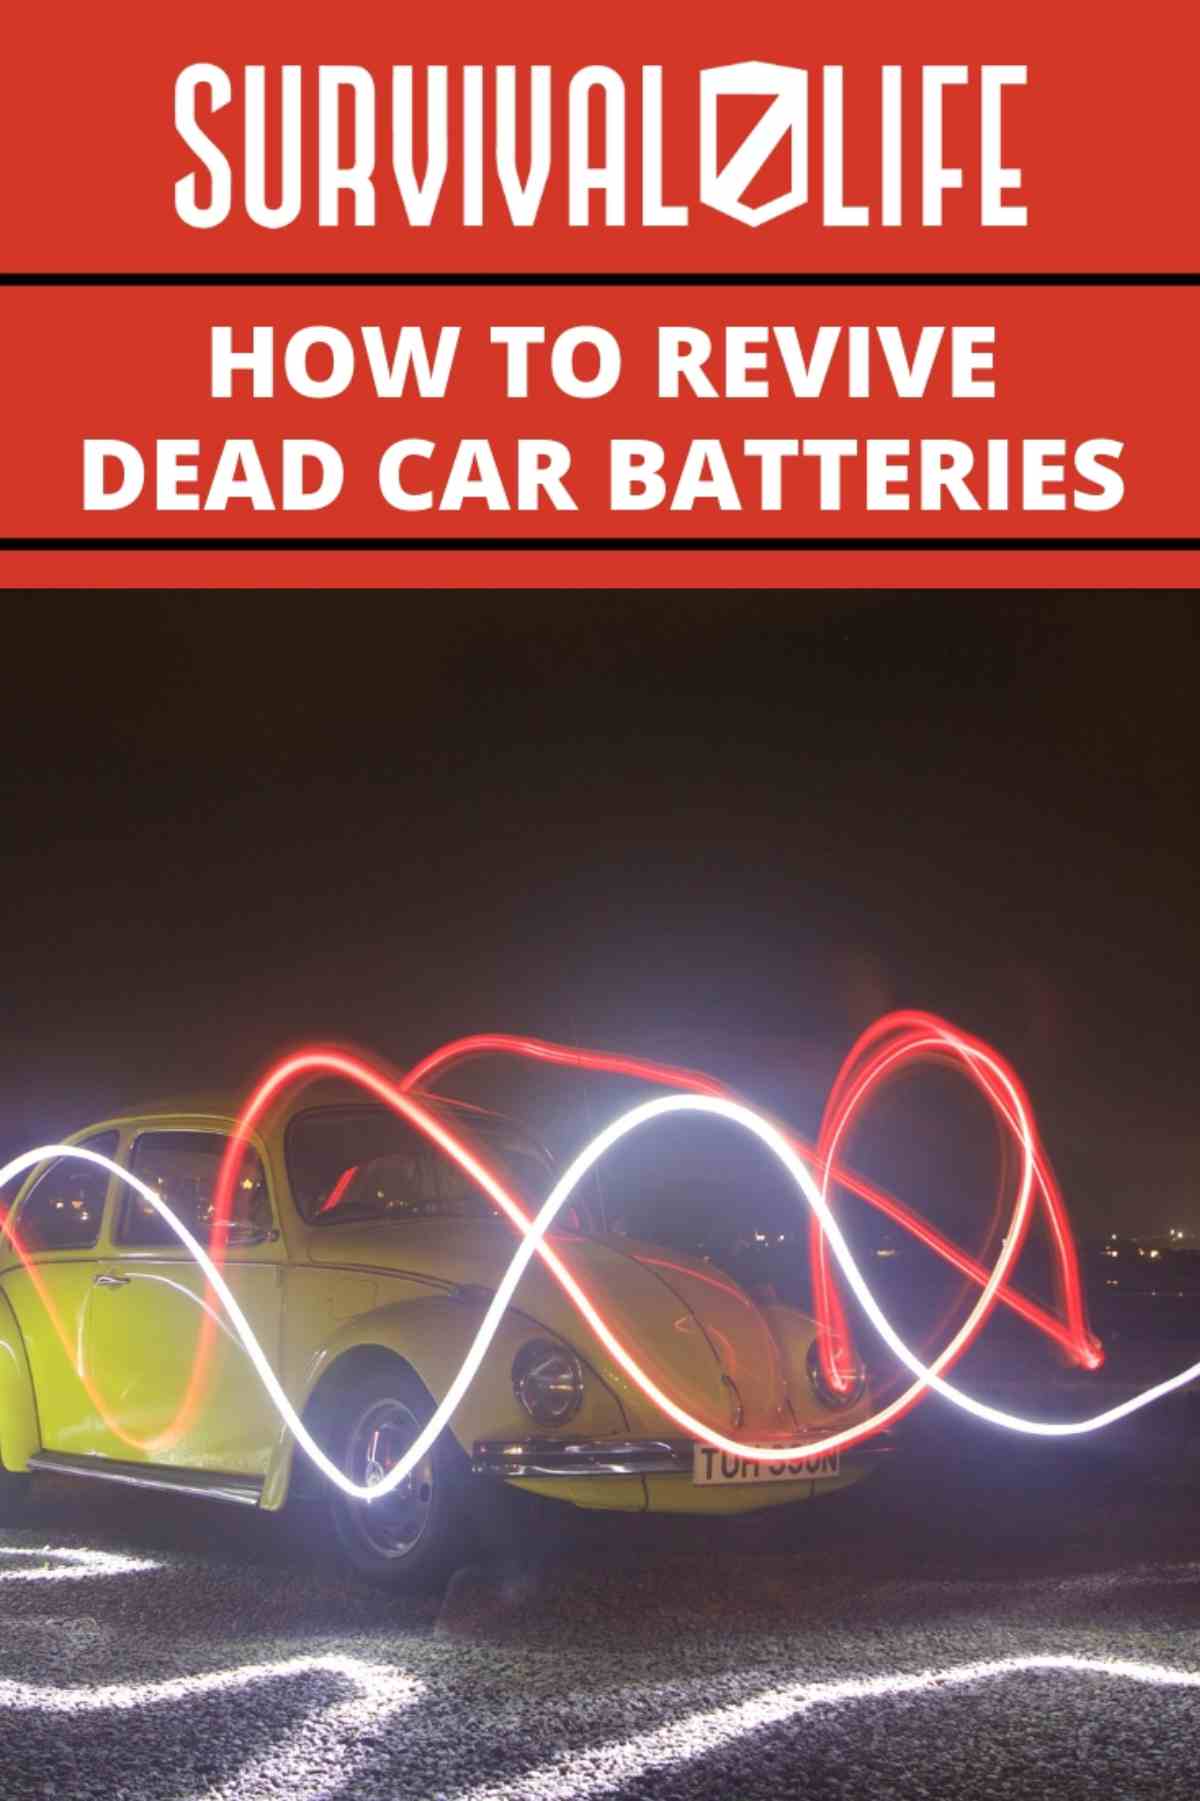 How To Revive Car Batteries: Don't Throw Dead Batteries Just Yet | https://survivallife.com/revive-car-batteries/